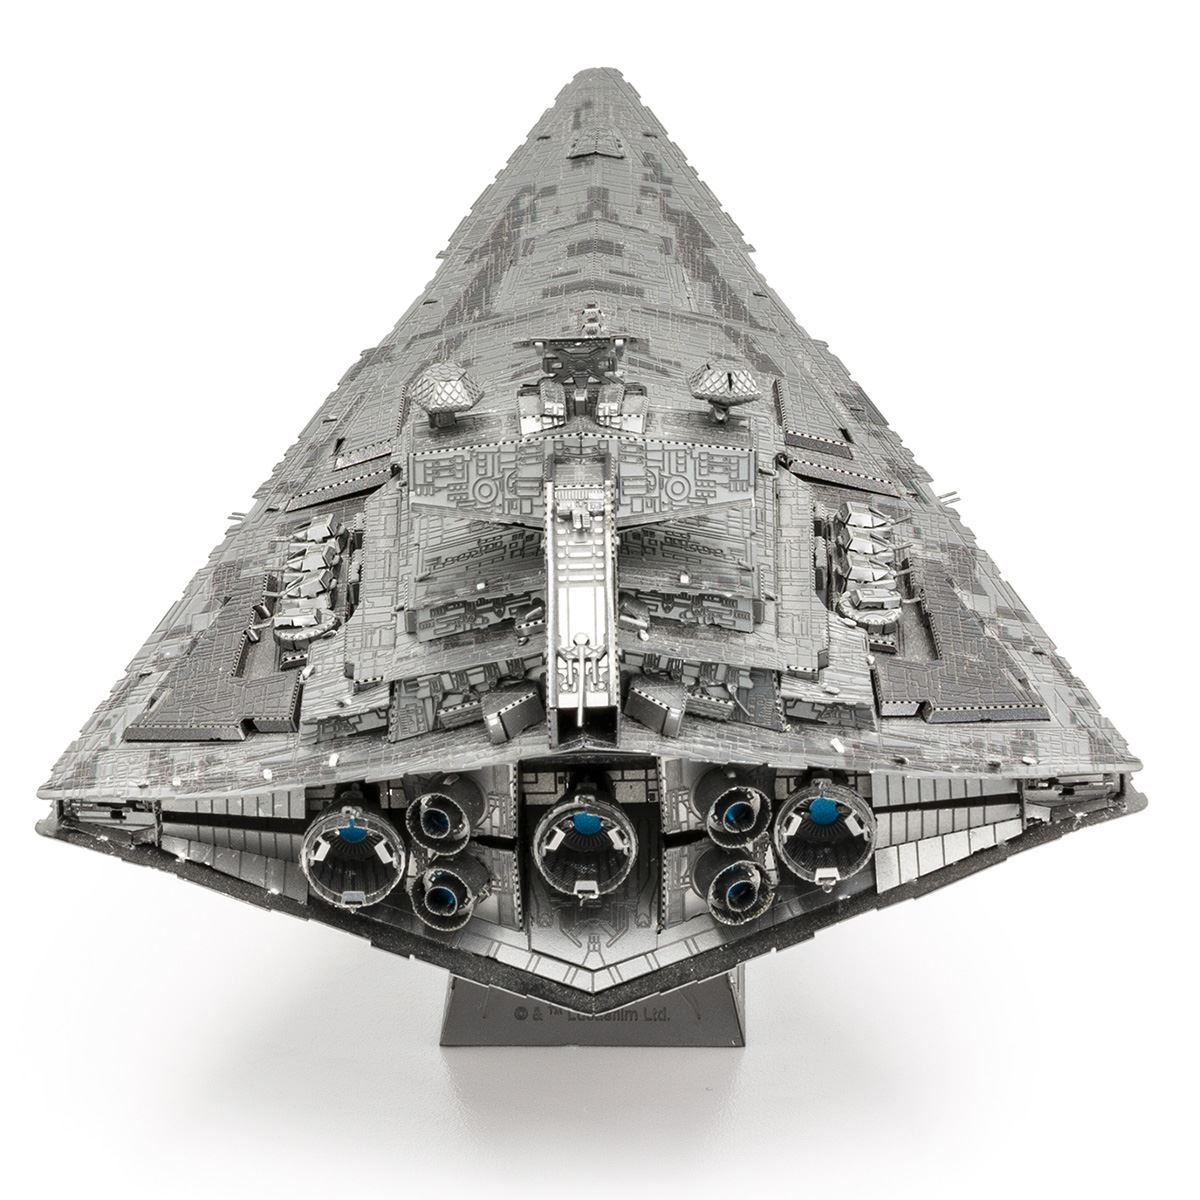 Metal Earth - Star Wars Premium Imperial Star Destroyer | Byggsats i metall